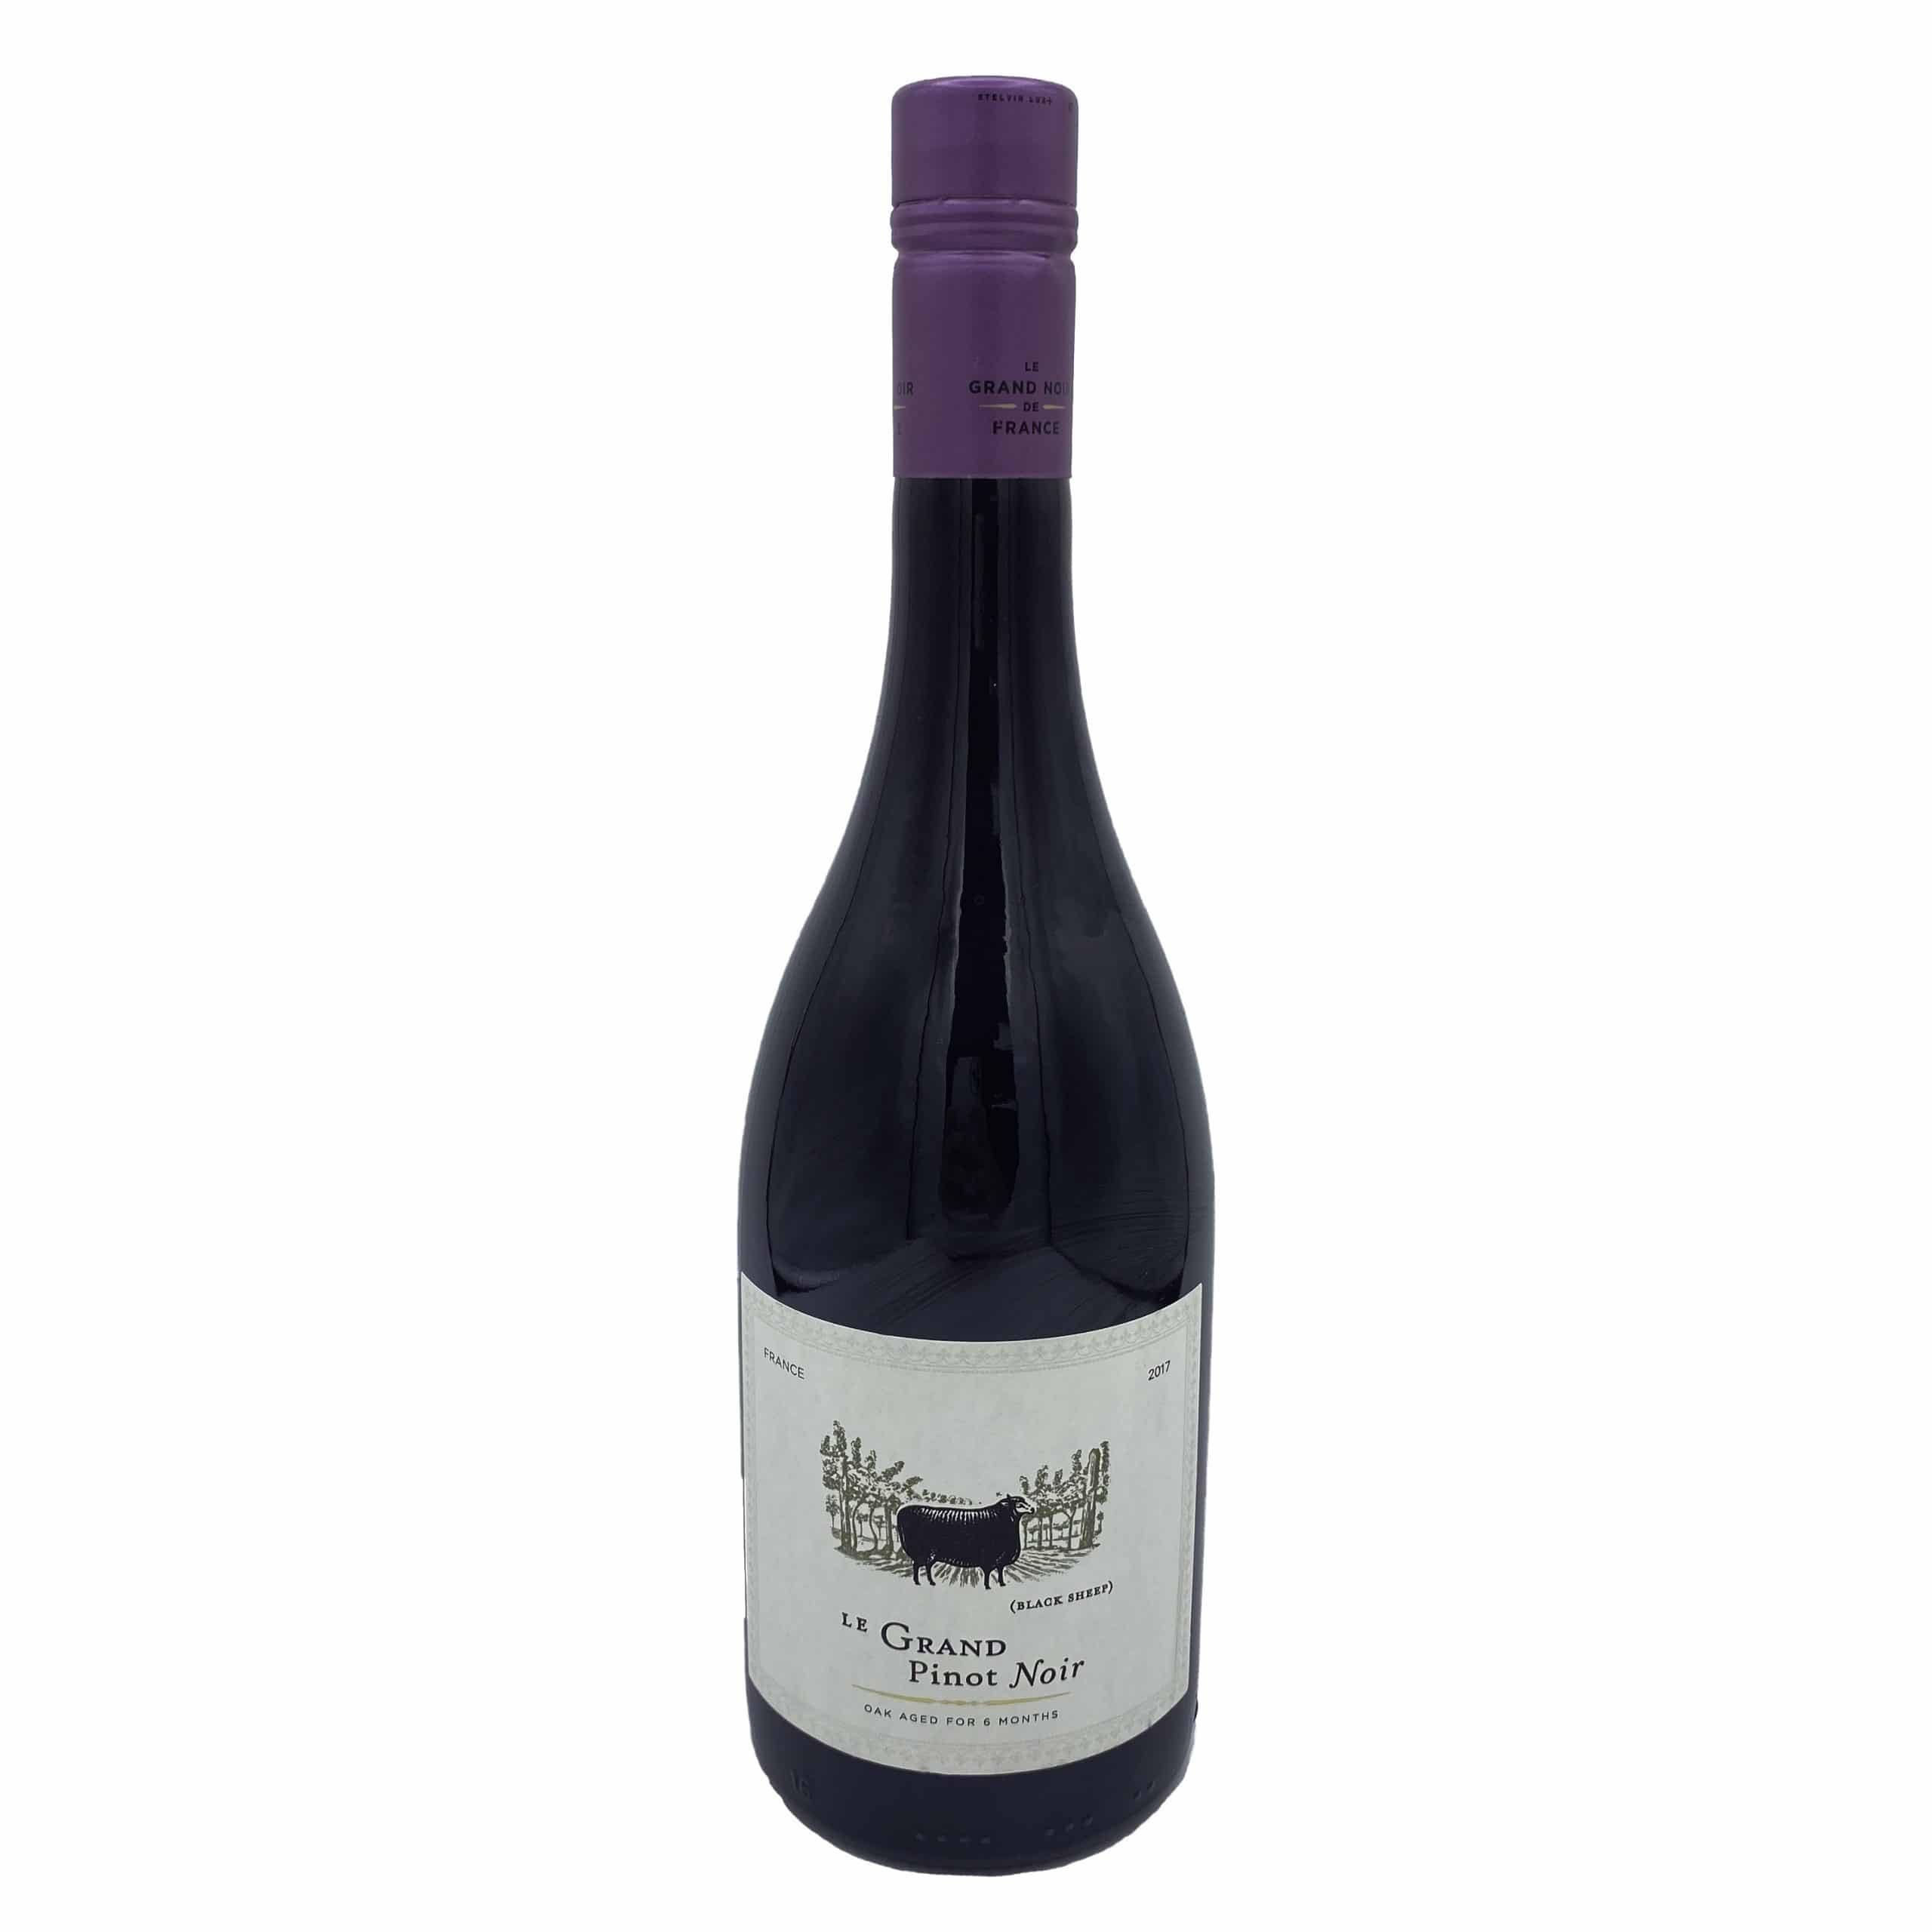 Le Grand Pinot Noir, France, 2009 - 750 ml